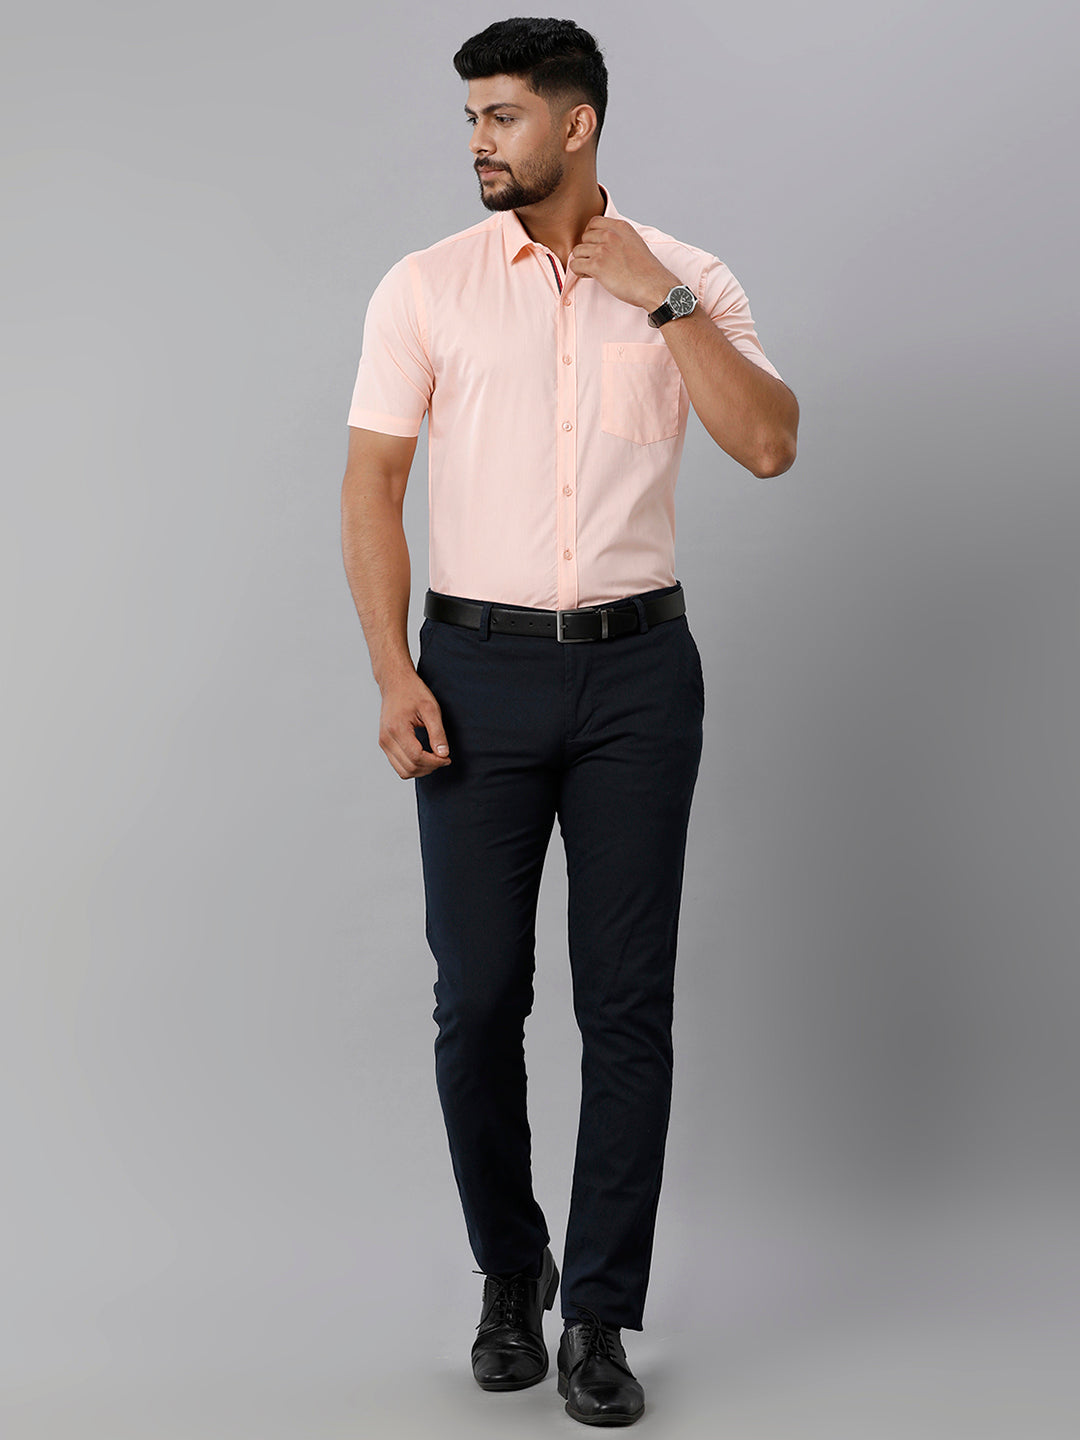 Mens Premium Cotton Formal Shirt Half Sleeves Light Orange MH G117-Full view